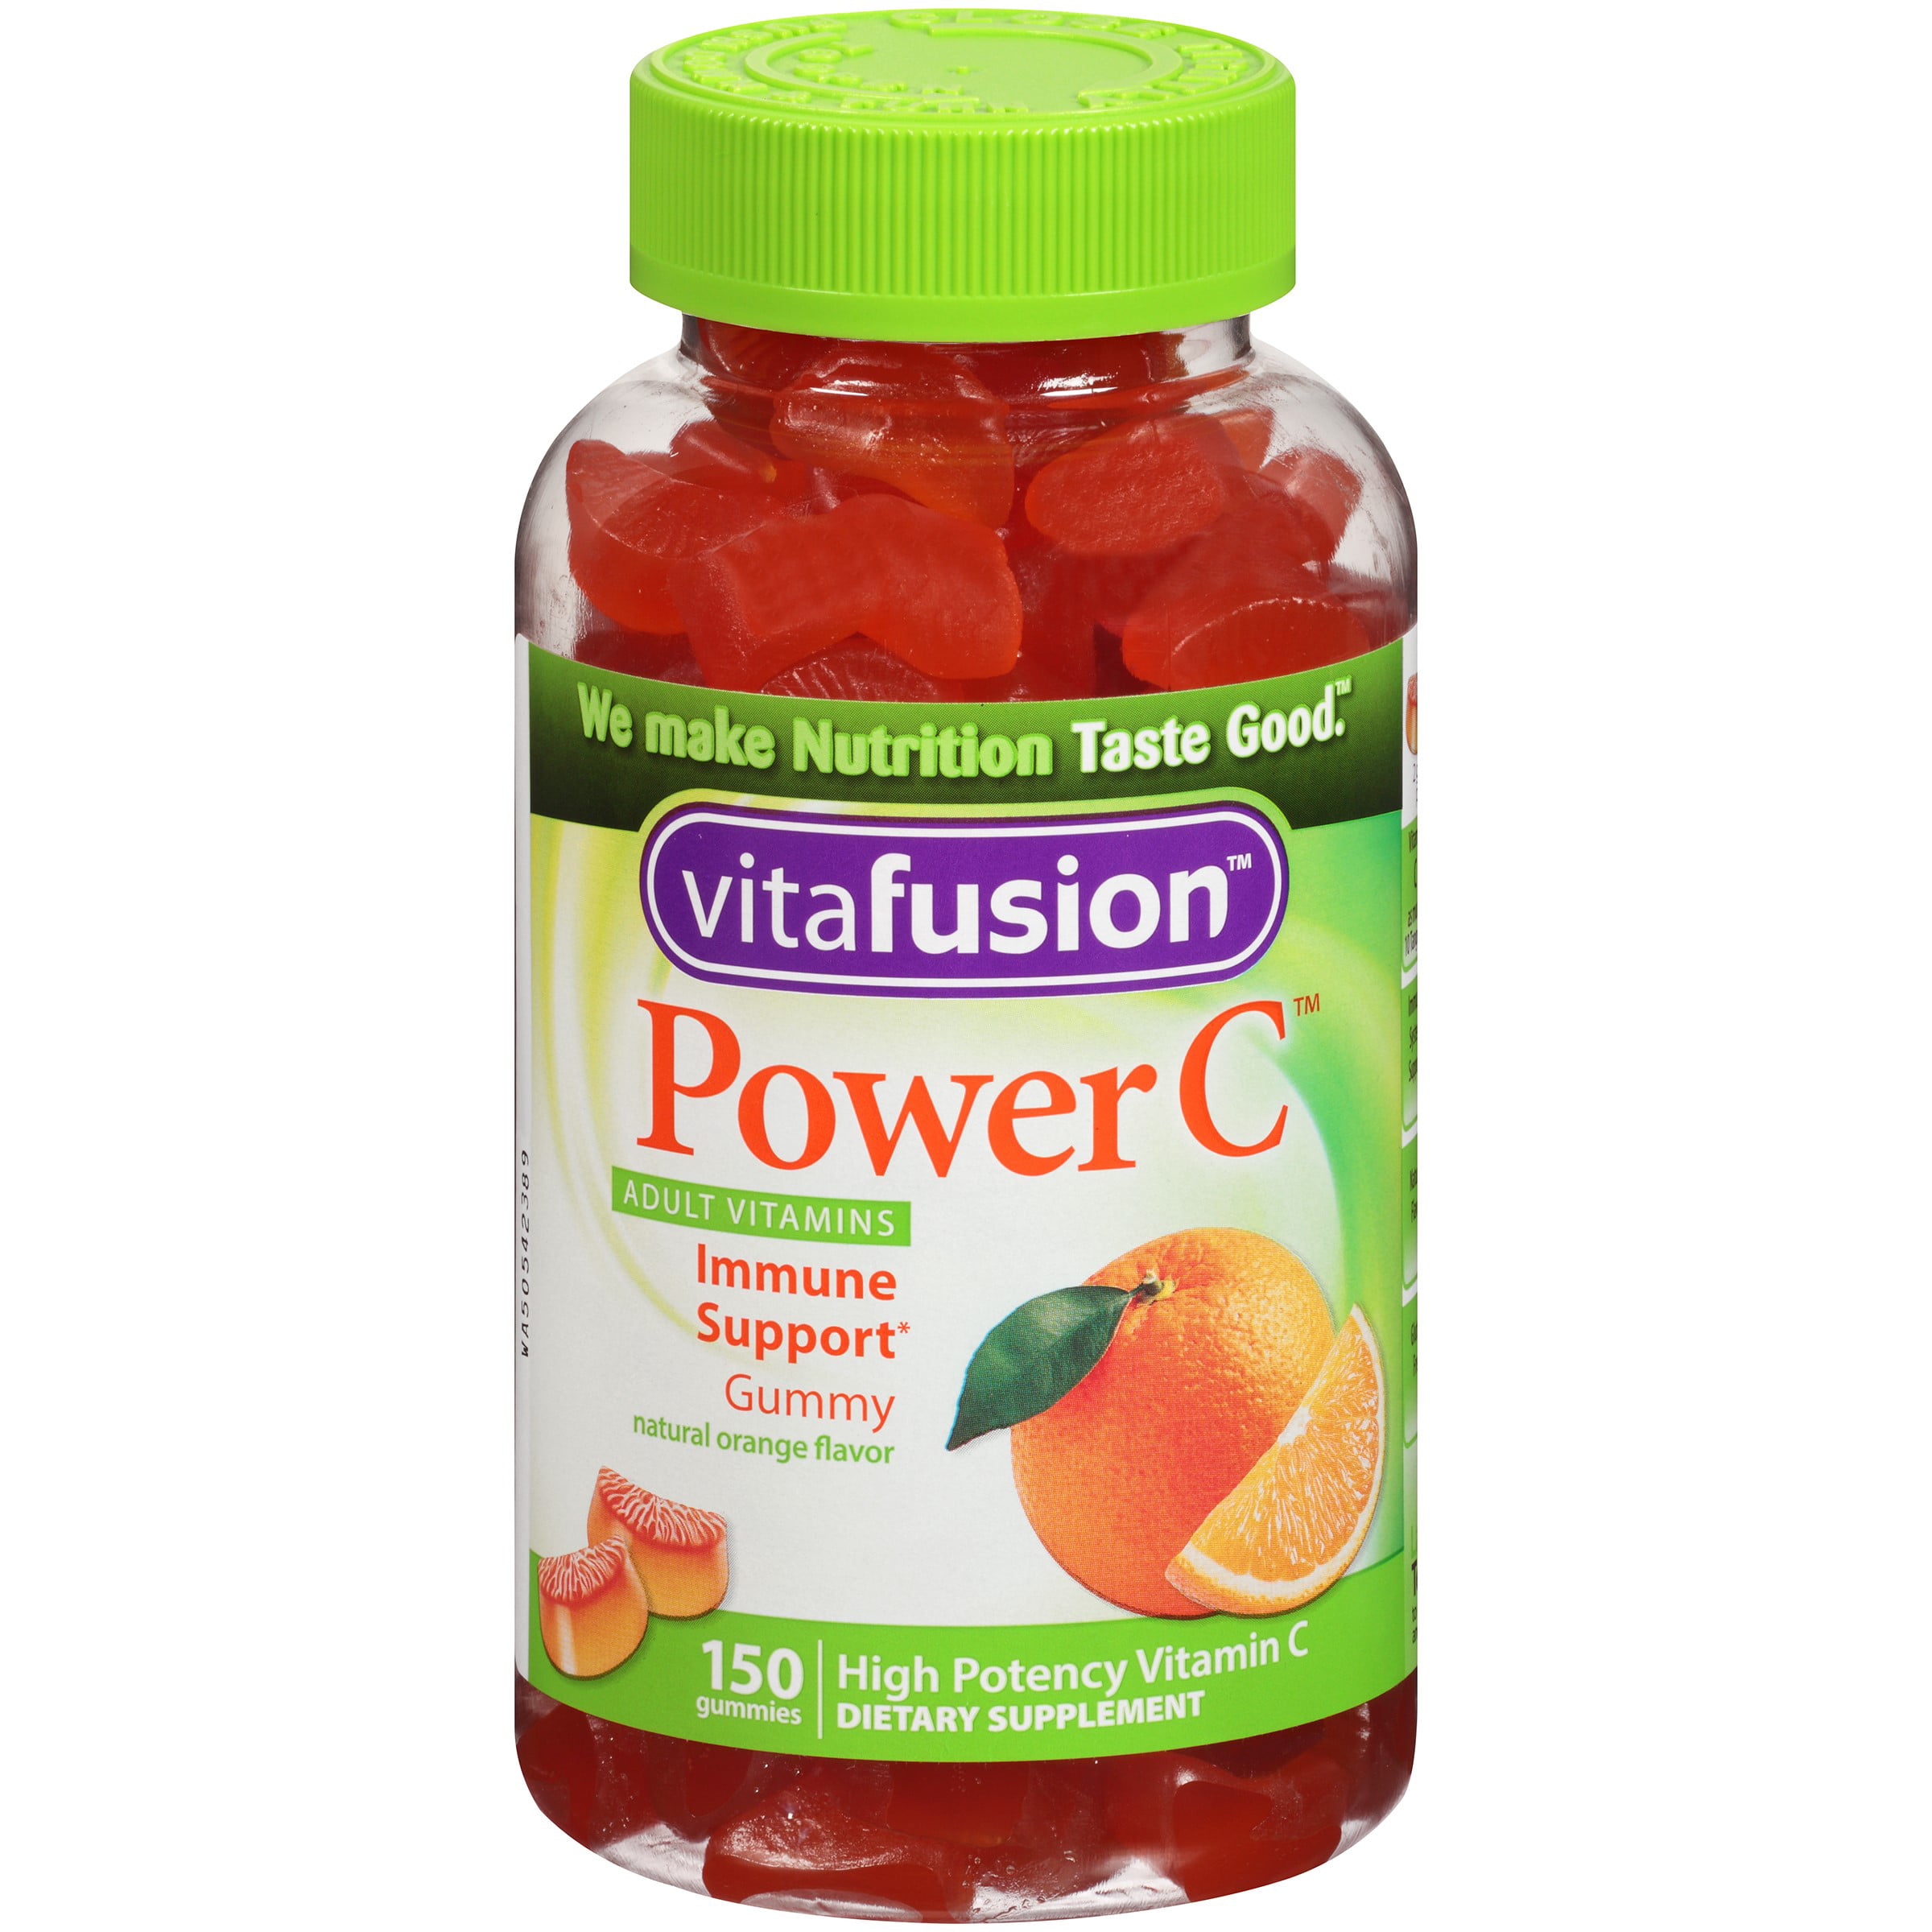 Vitafusion Power C Immune Support Adults Gummy Vitamins, Natural Orange ...